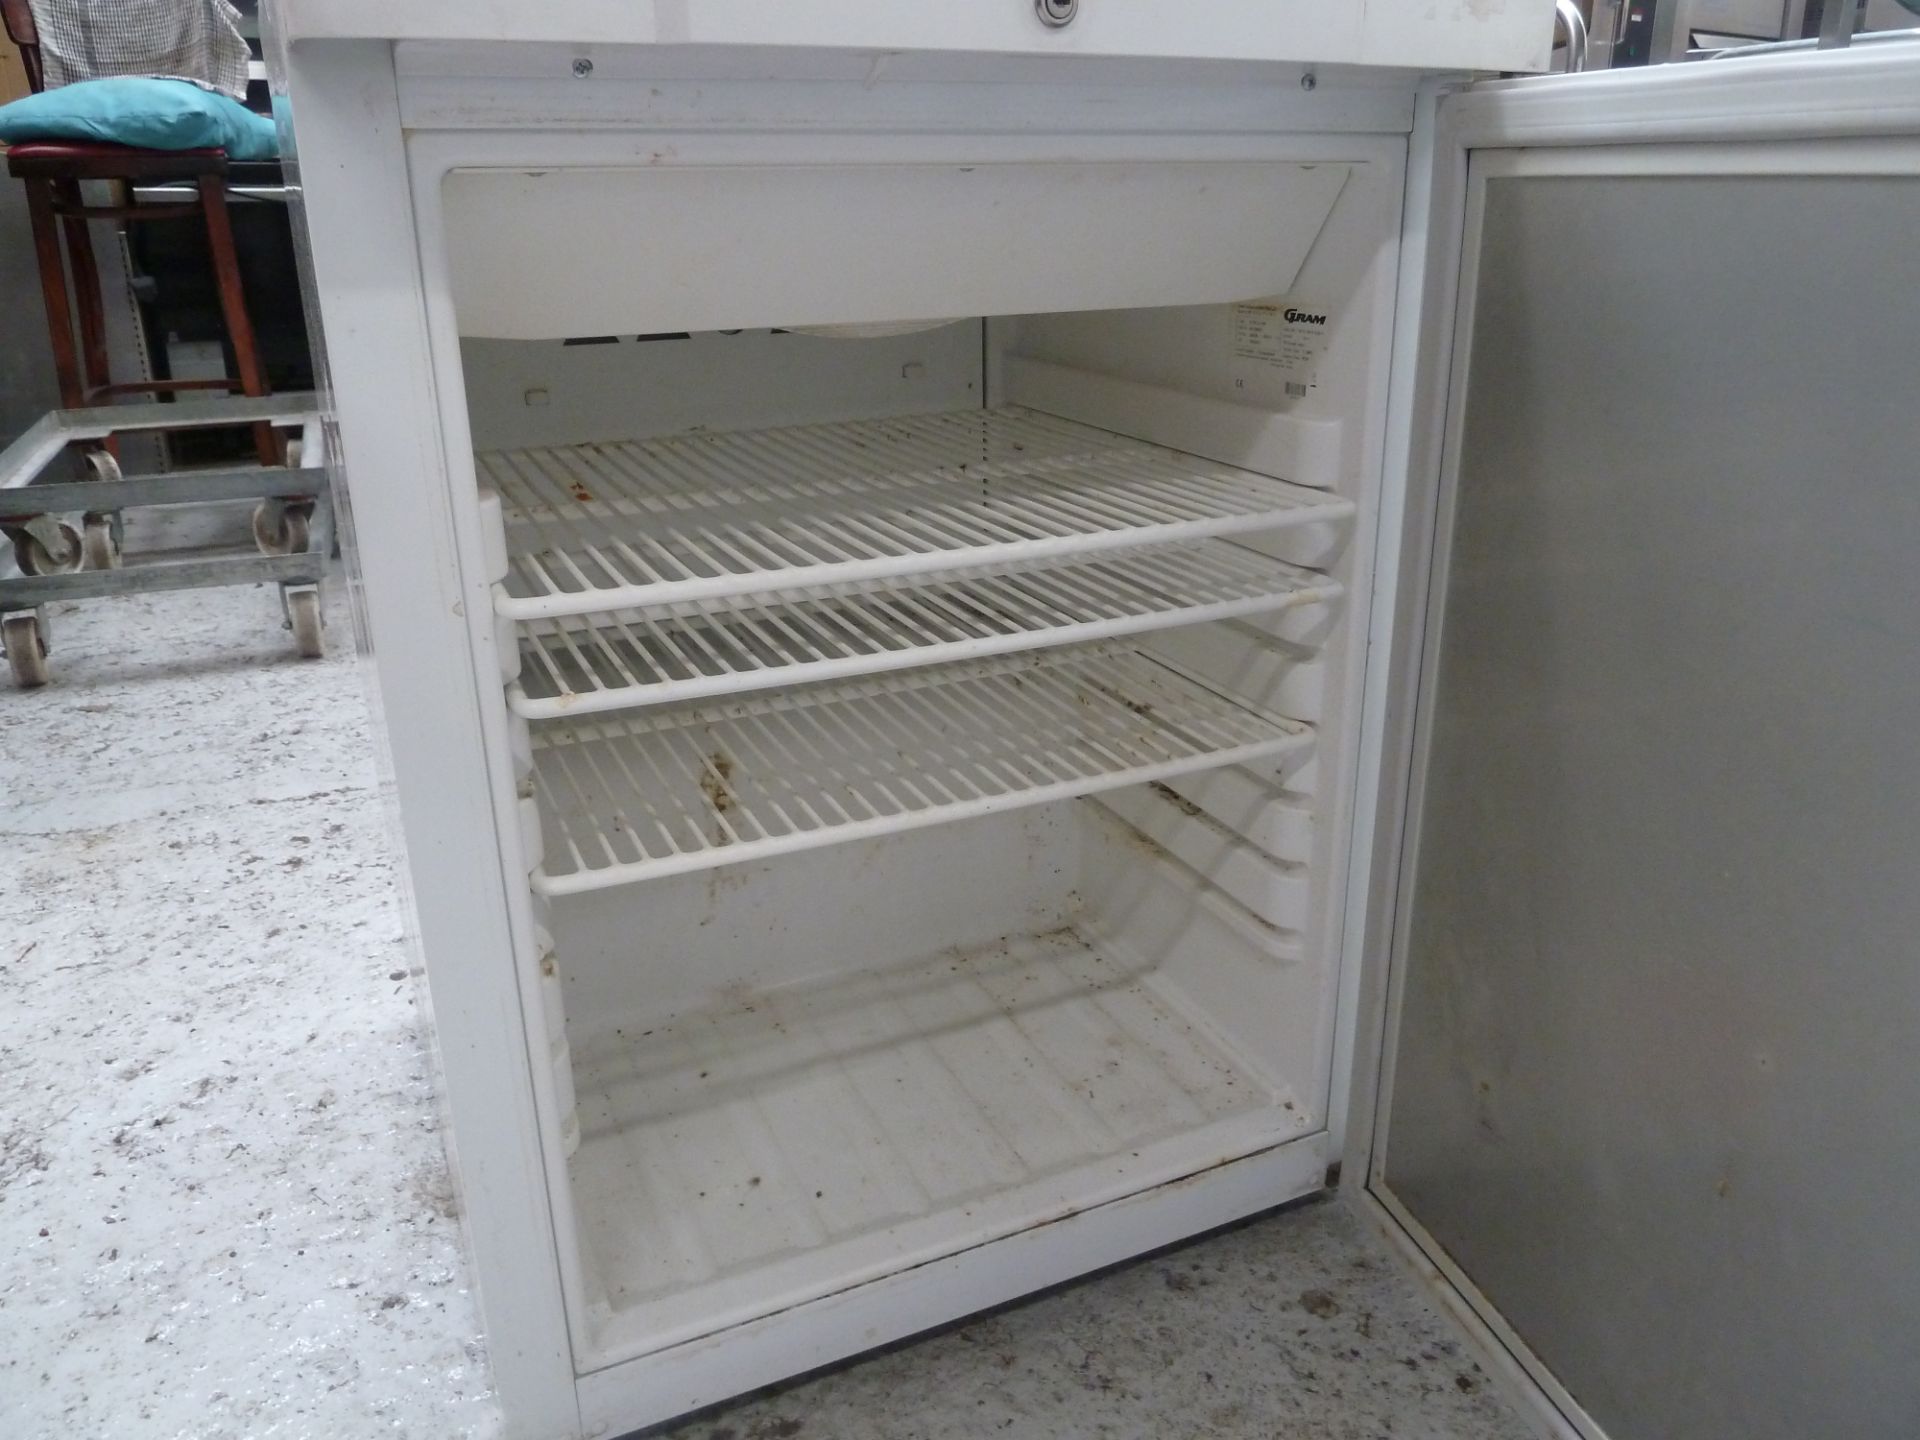 * white gram refrigerator, good condition, perfect for small kitchen.